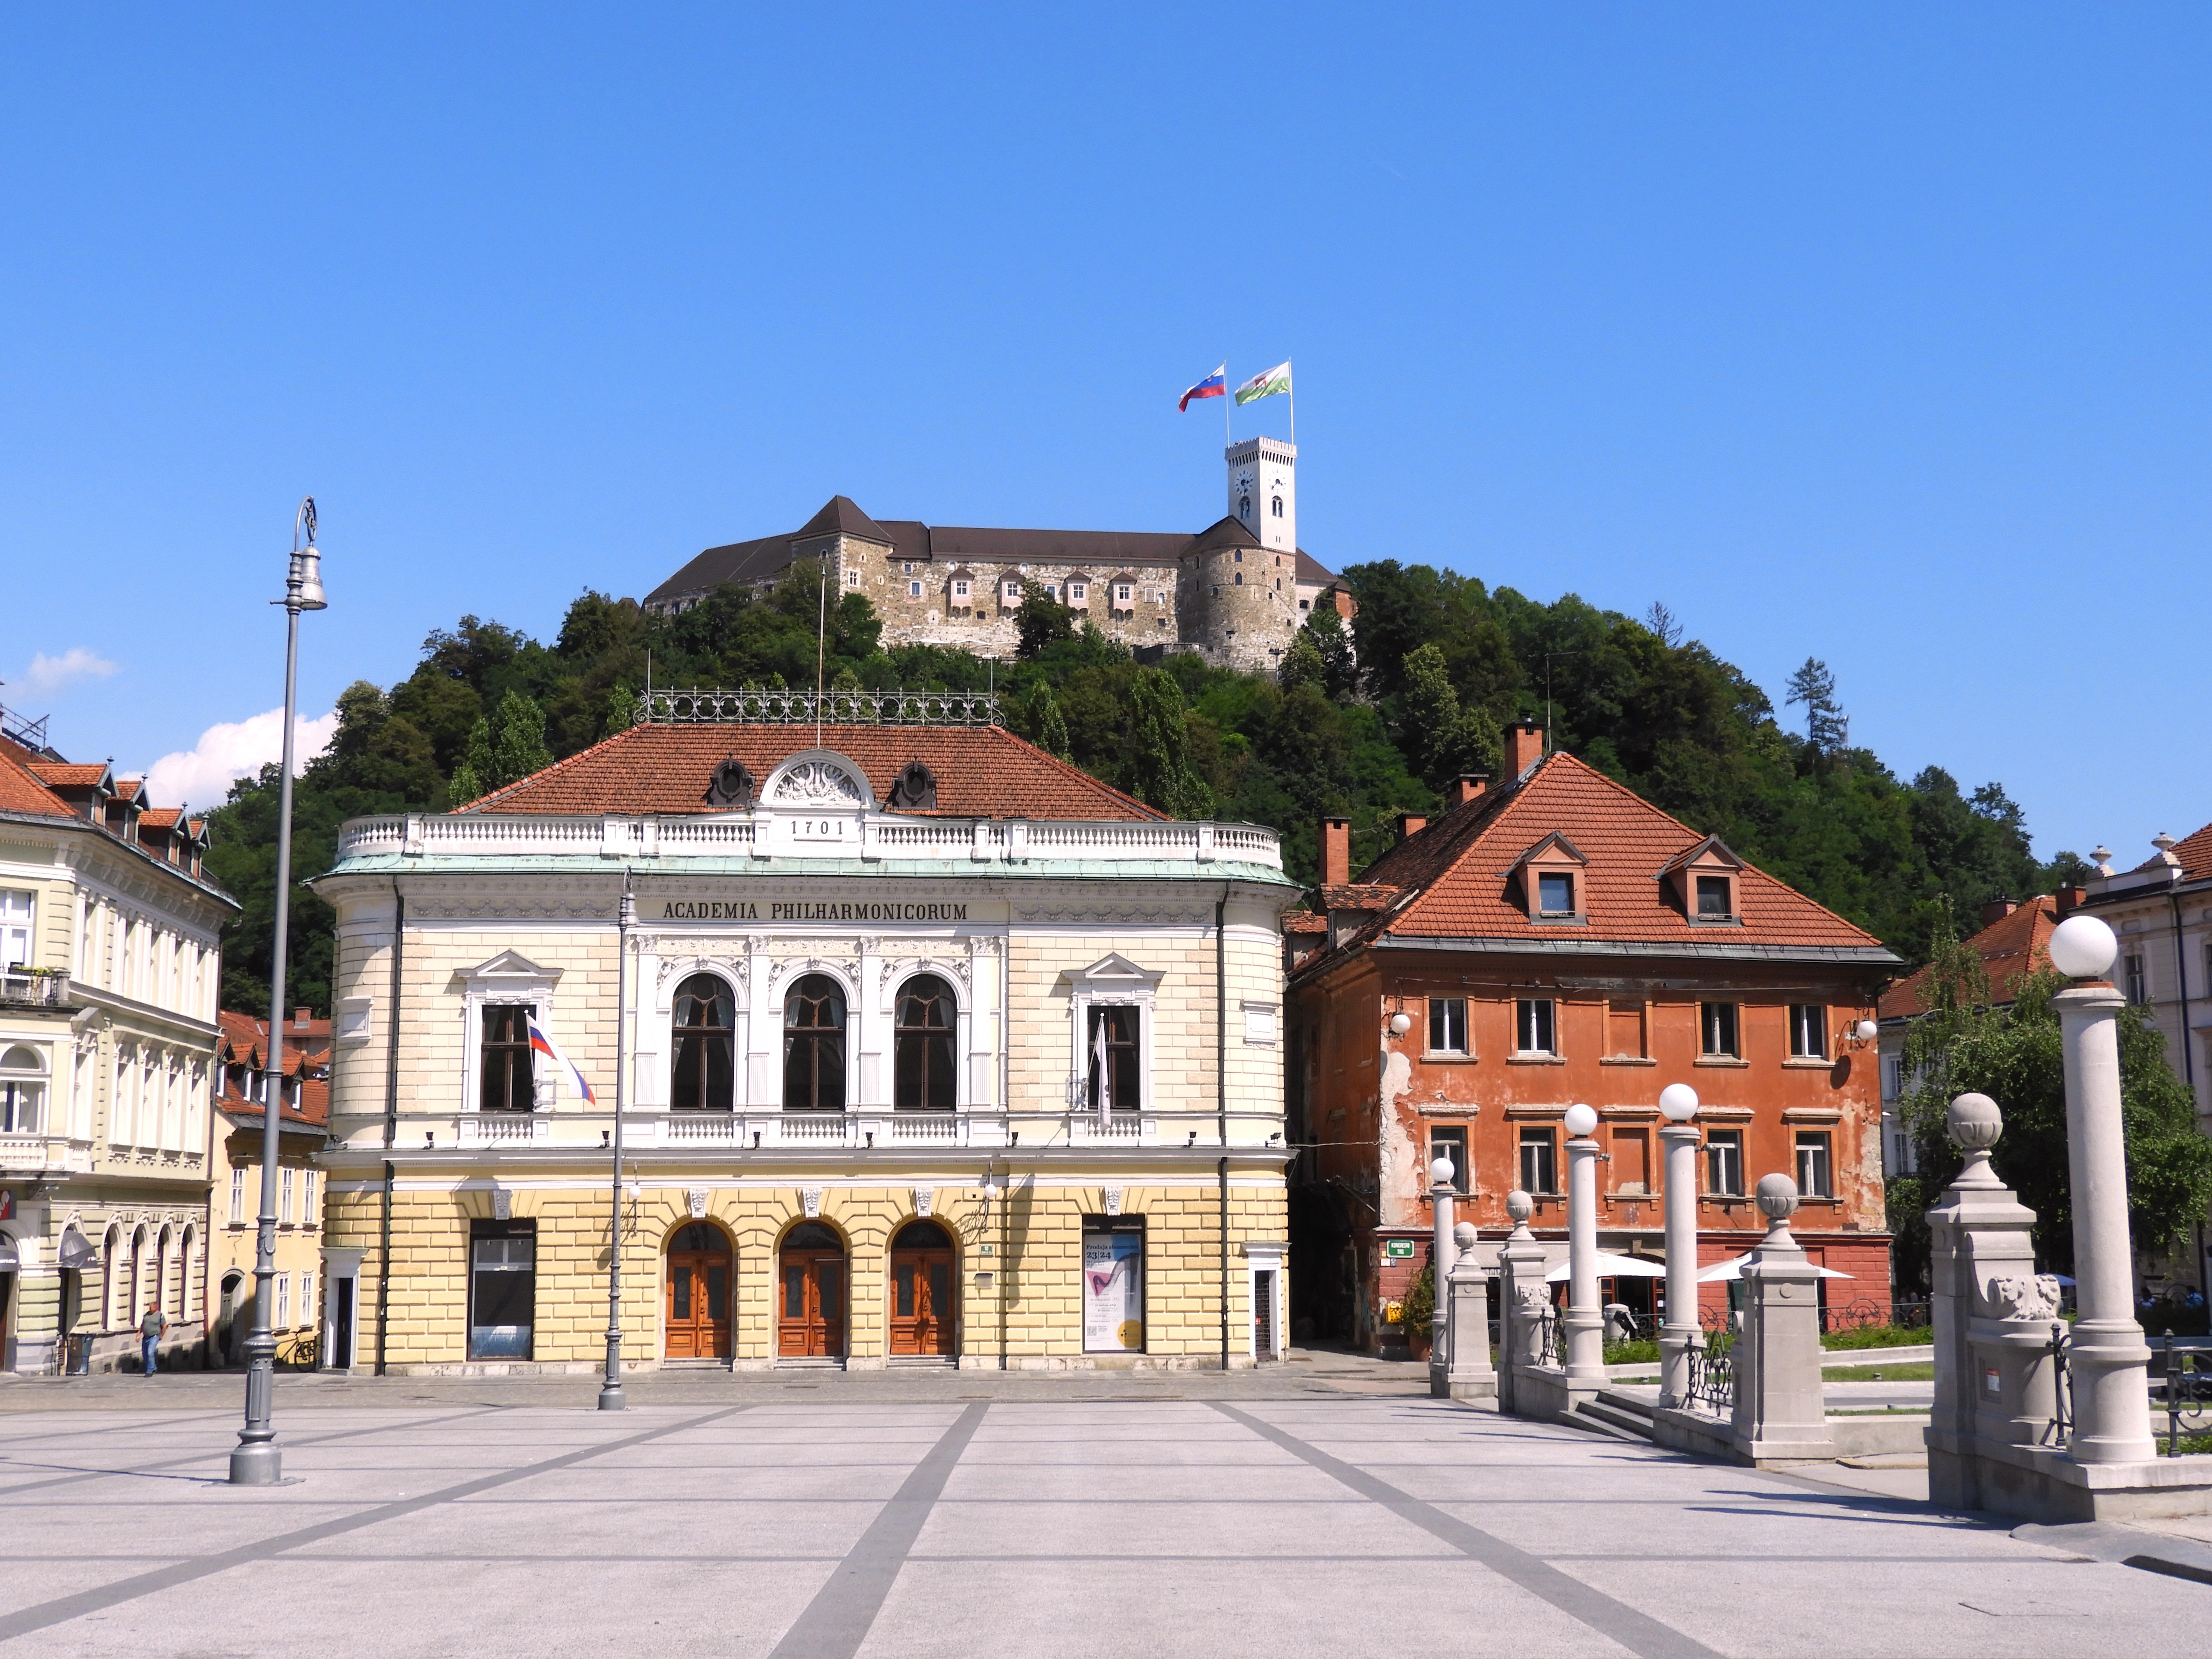 1212 - 05 - Accademia Filarmonica e Castello a Lubiana - Slovenia